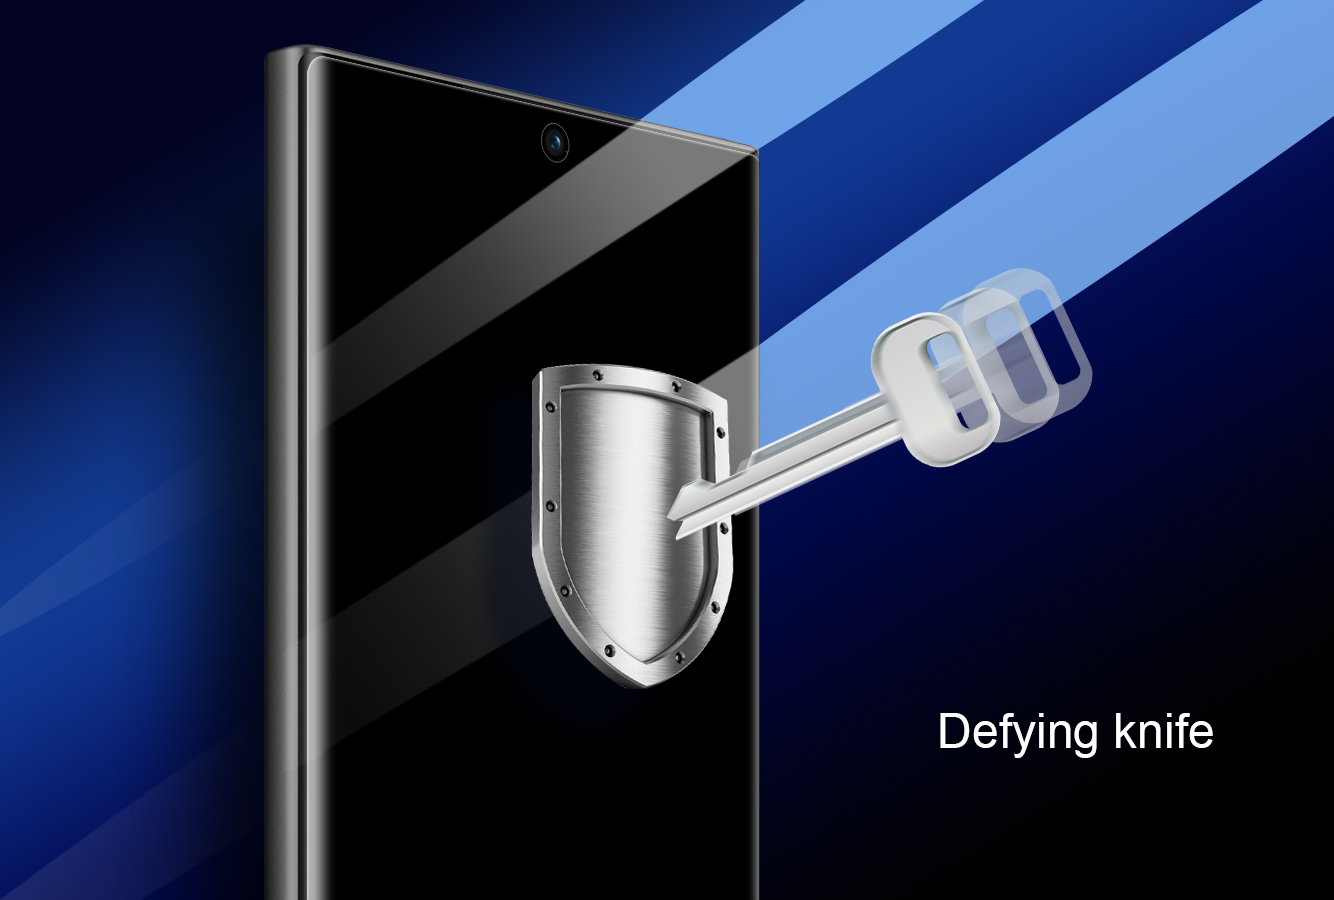 Samsung Galaxy S23 Ultra Tempered Glass